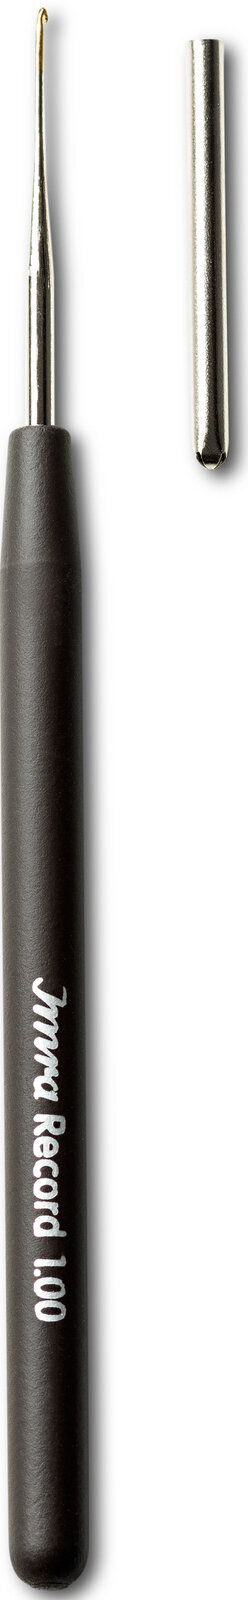 Cârlige metalice
 PRYM Cârlige metalice
 12,5 cm 1 mm